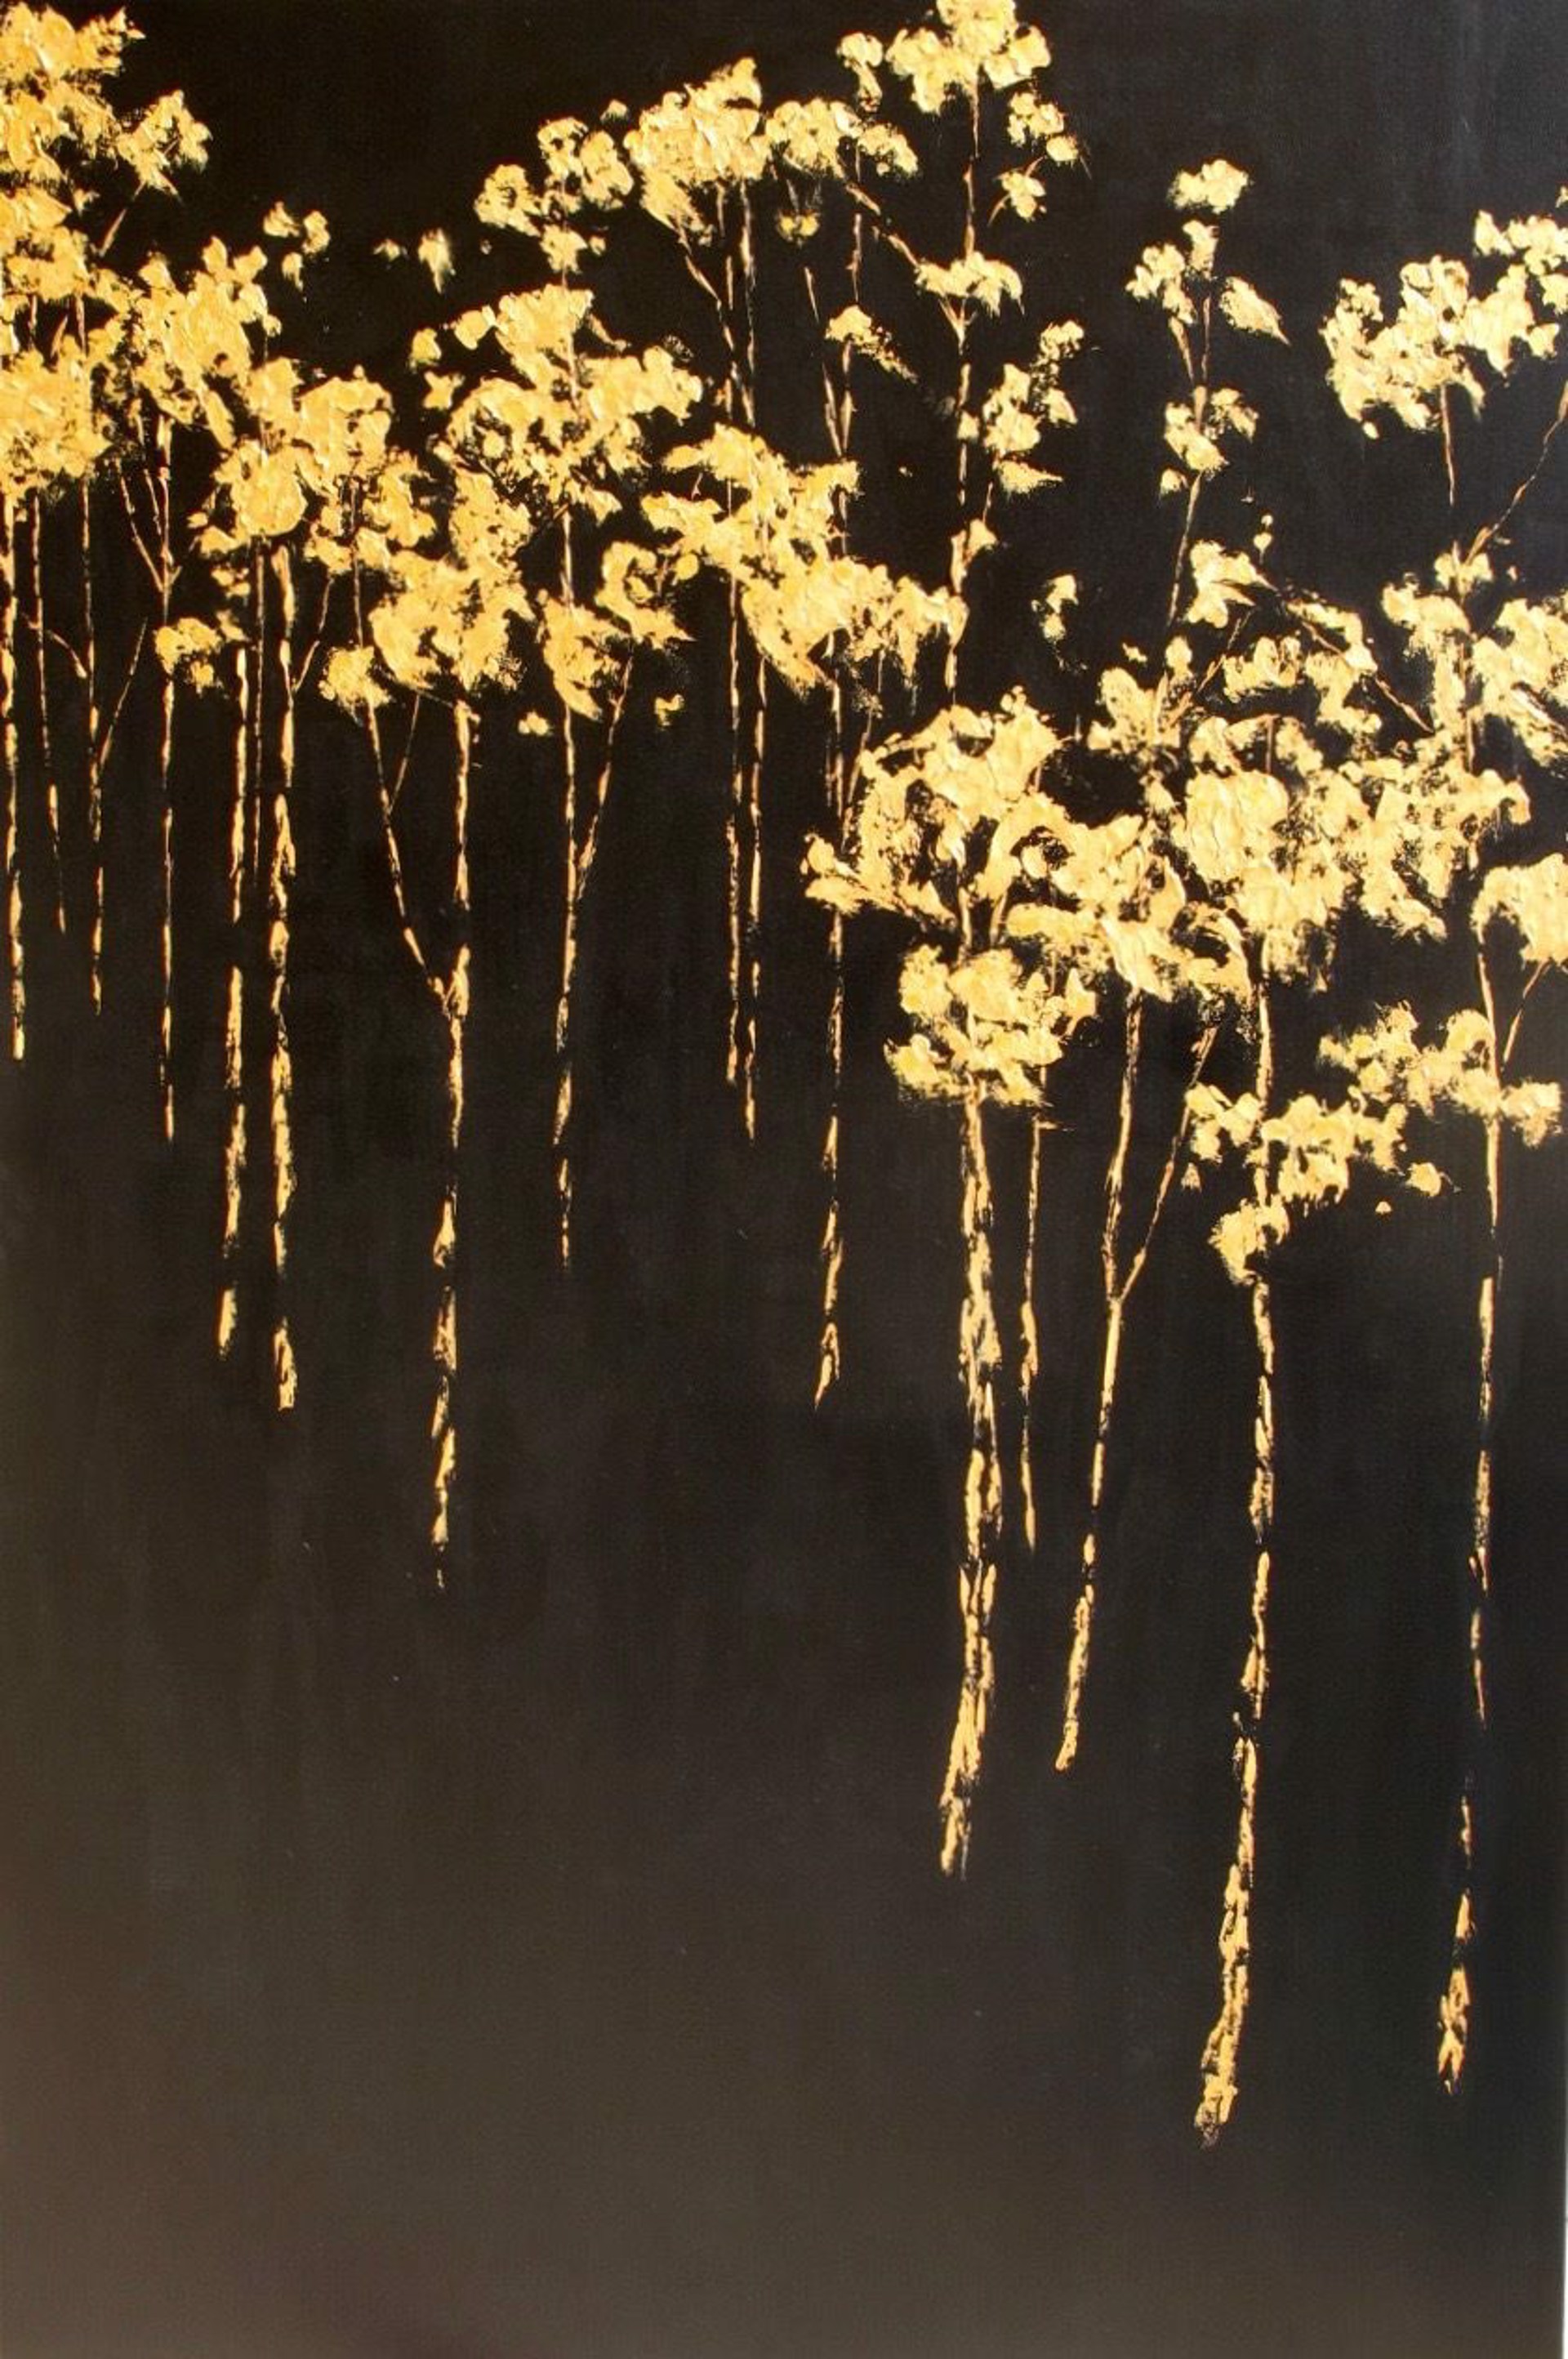 Golden Rain by Barrett Edwards